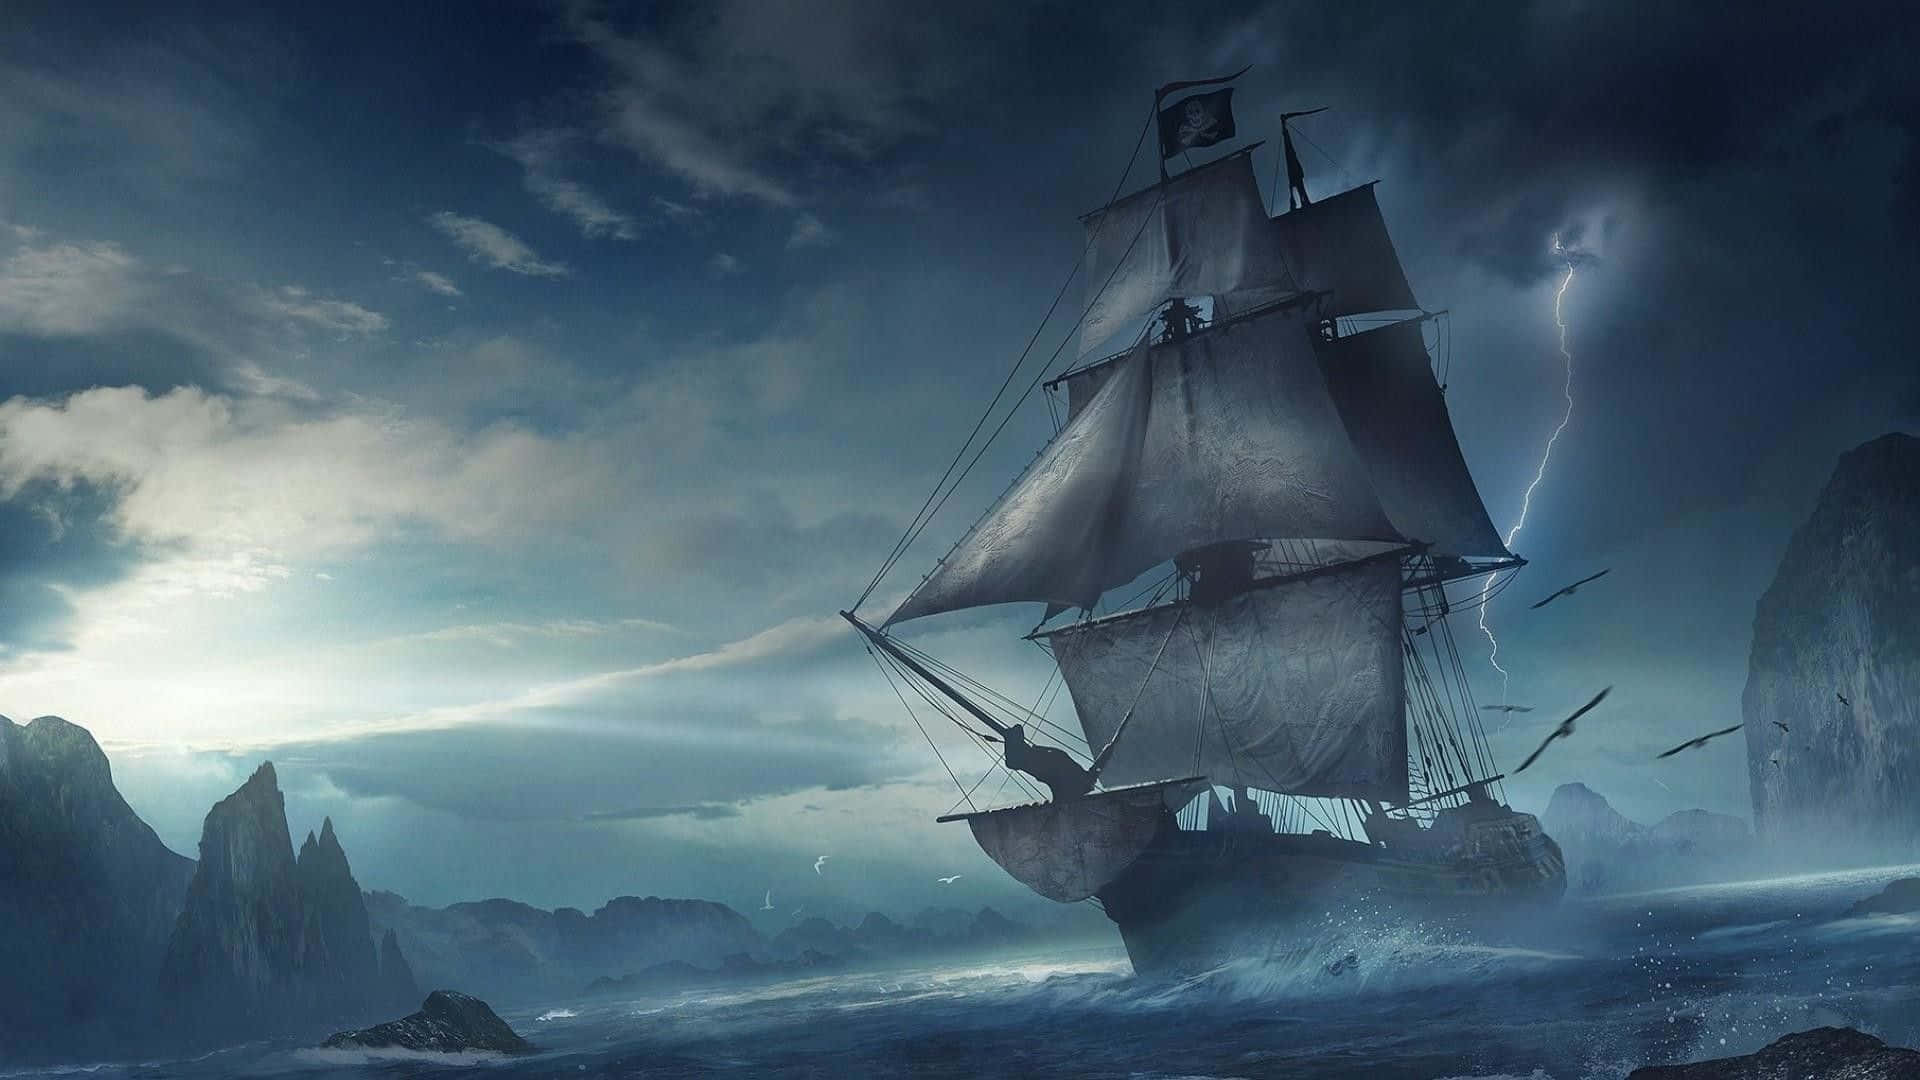 Majestic Pirate Ship Sailing the High Seas